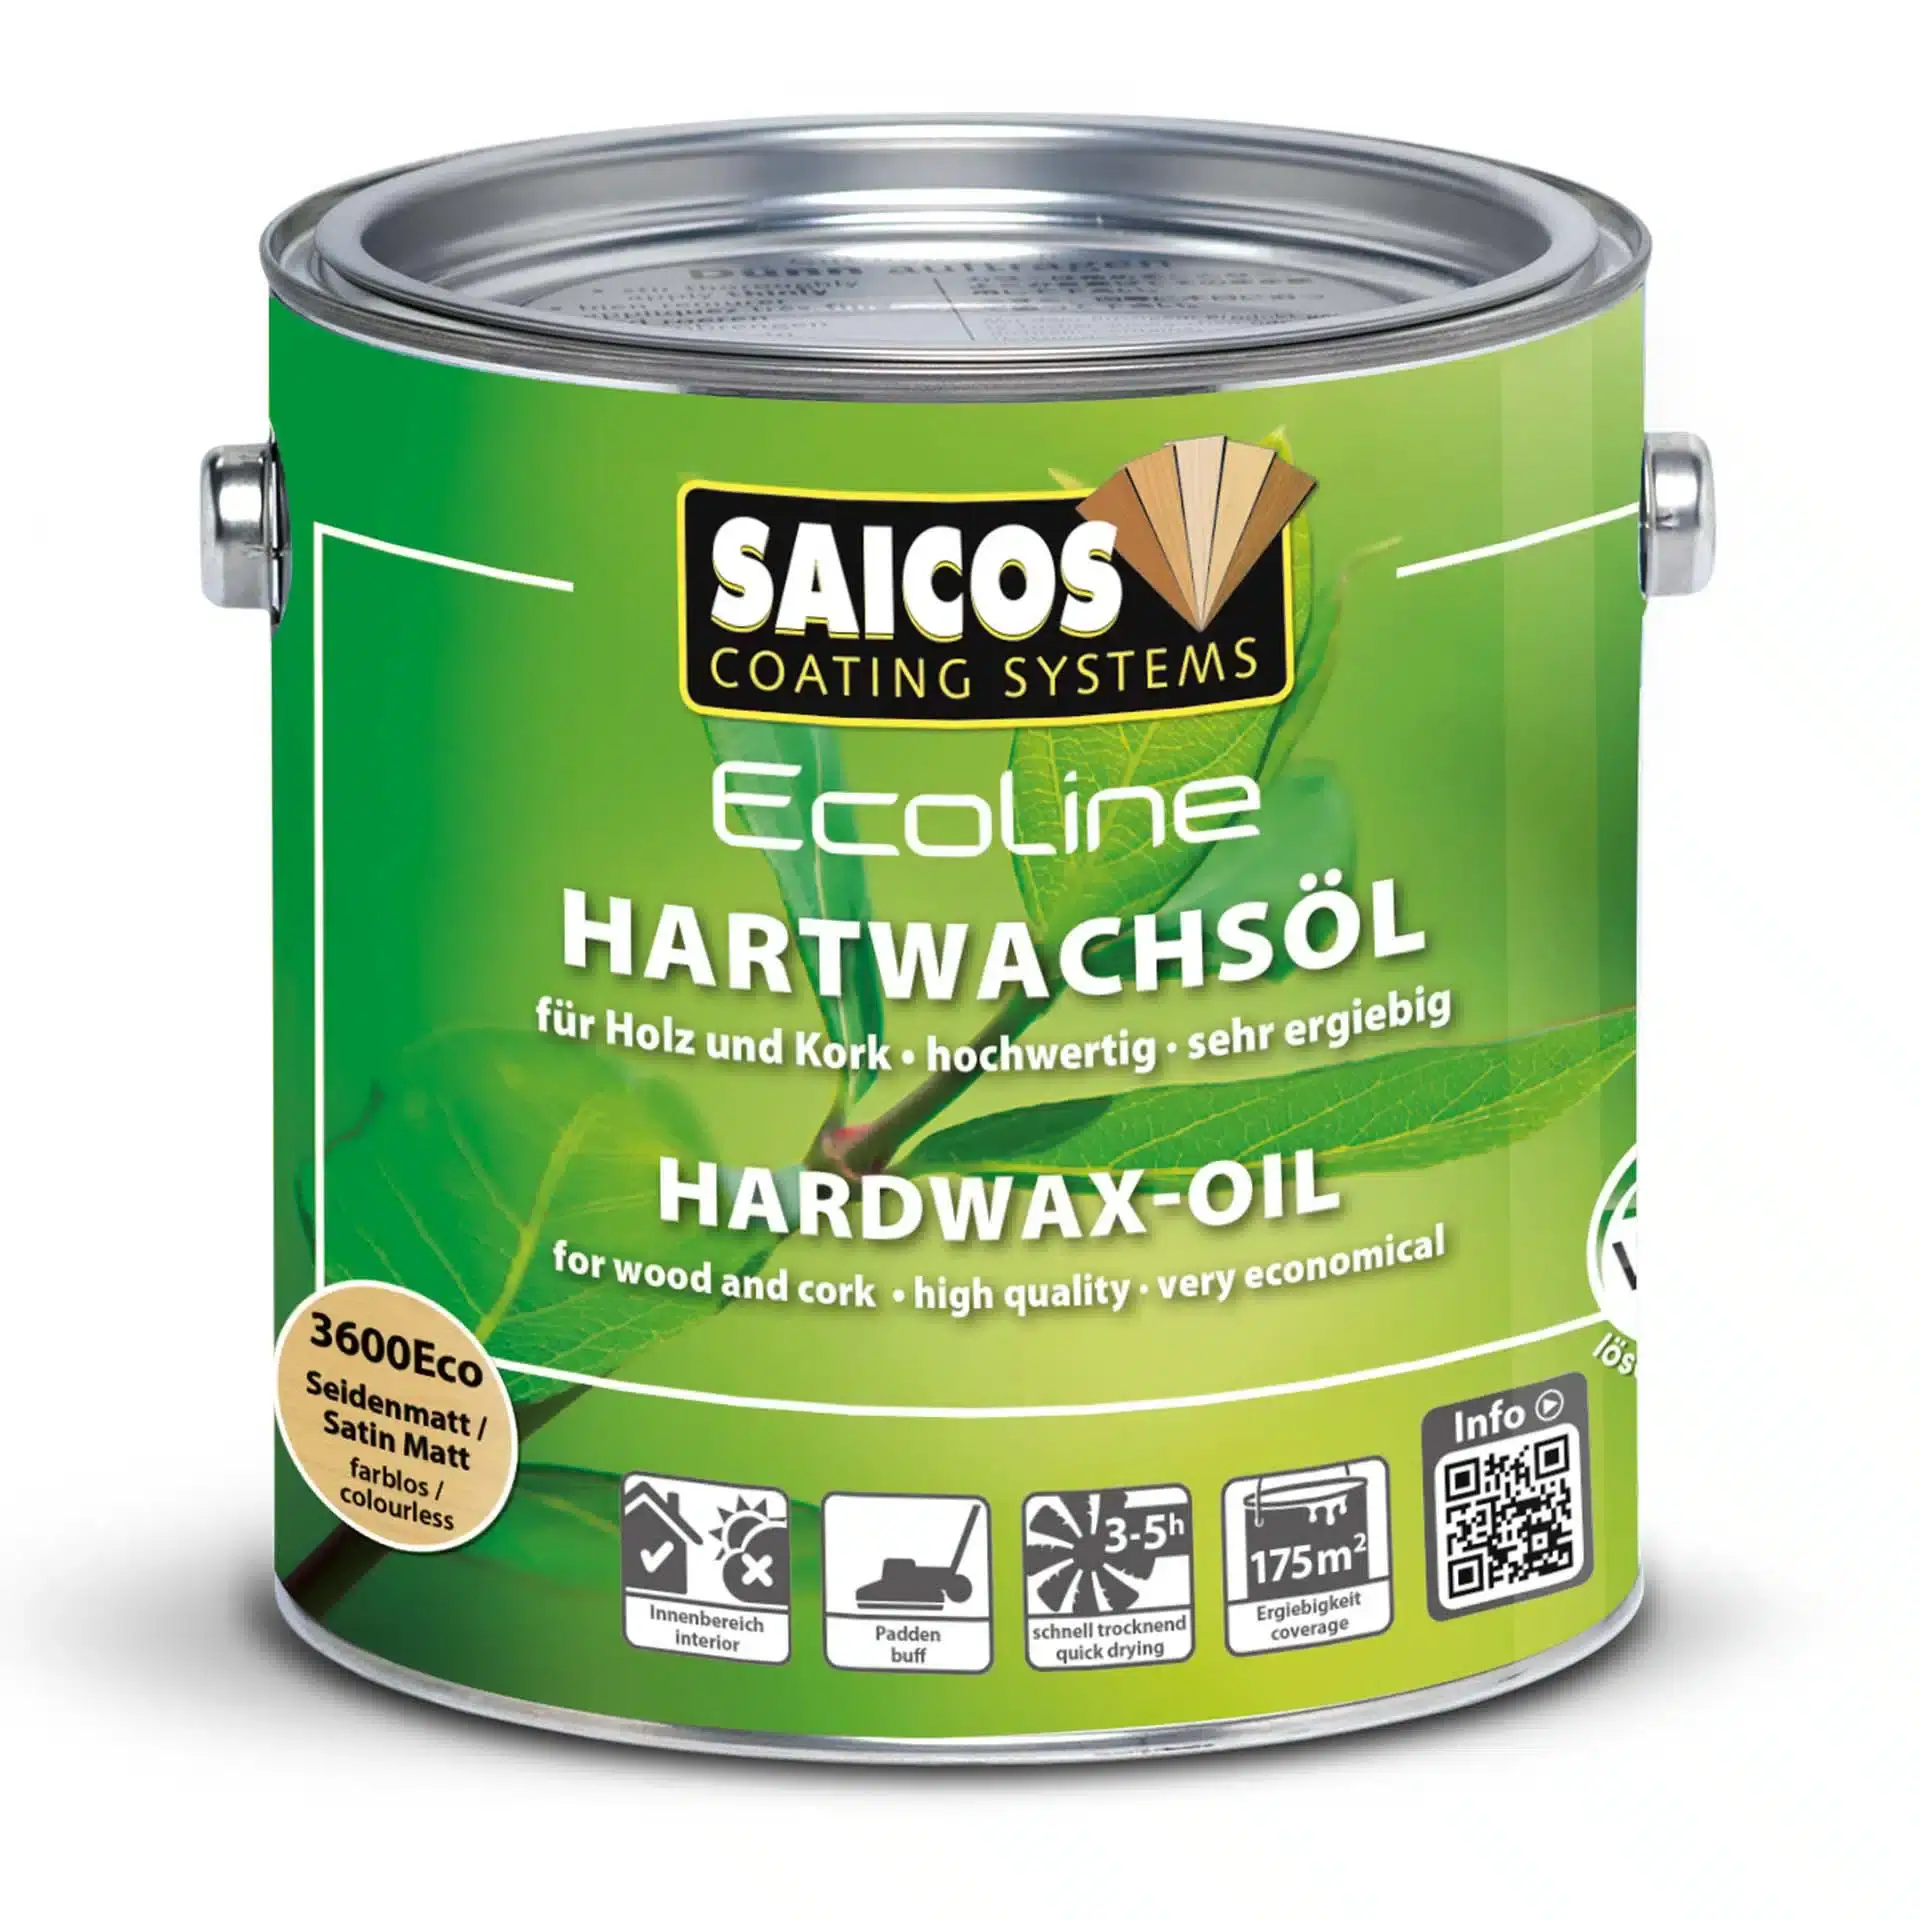 SAICOS Ecoline Hardwax-Oil 3600